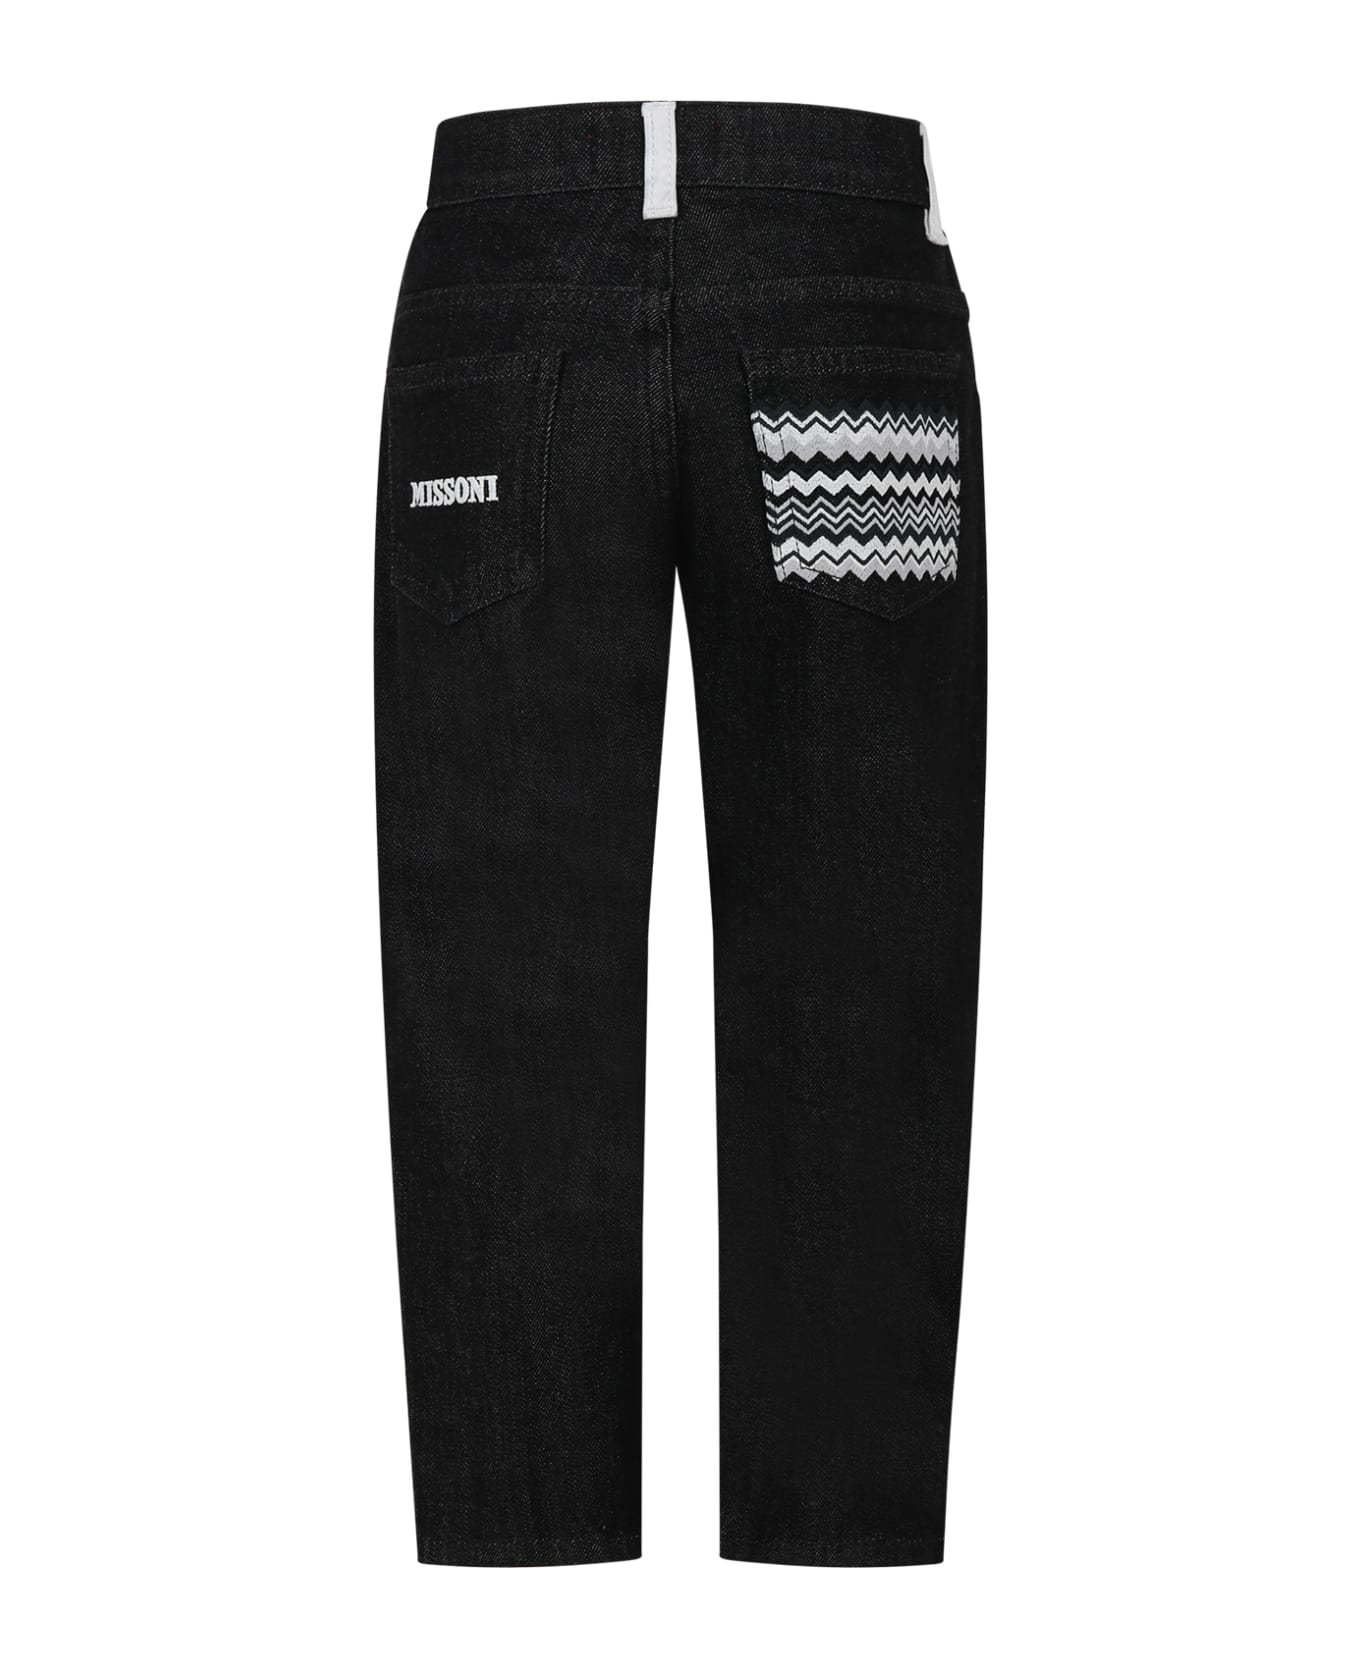 Missoni Kids Black Jeans For Boy With Logo - Black